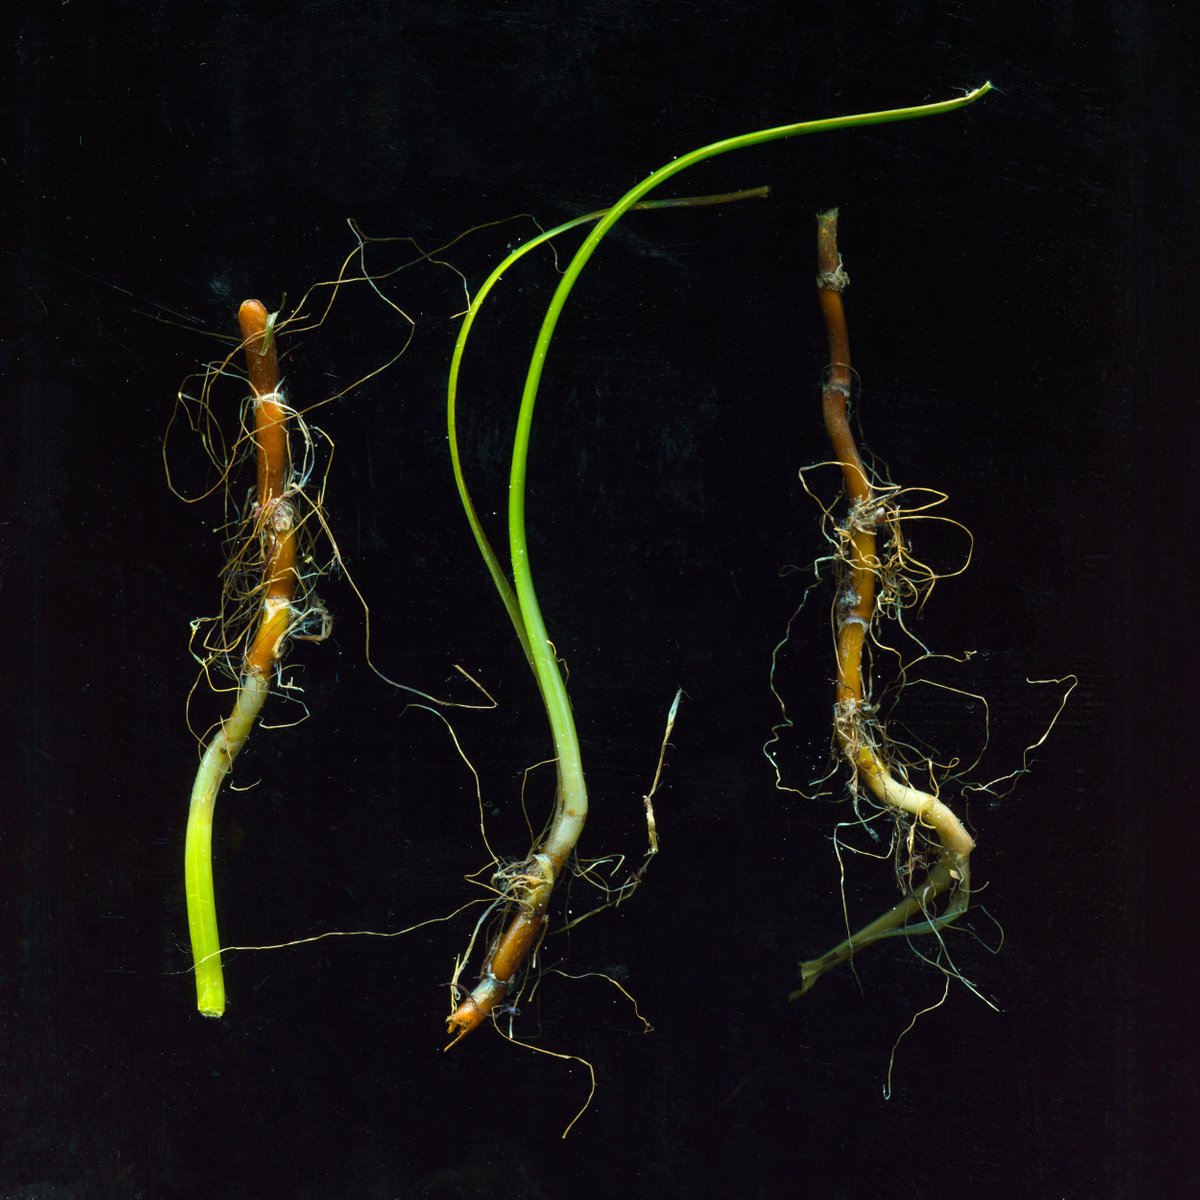 seaweed, stems and algae 1 by Jochim Lichtenberger